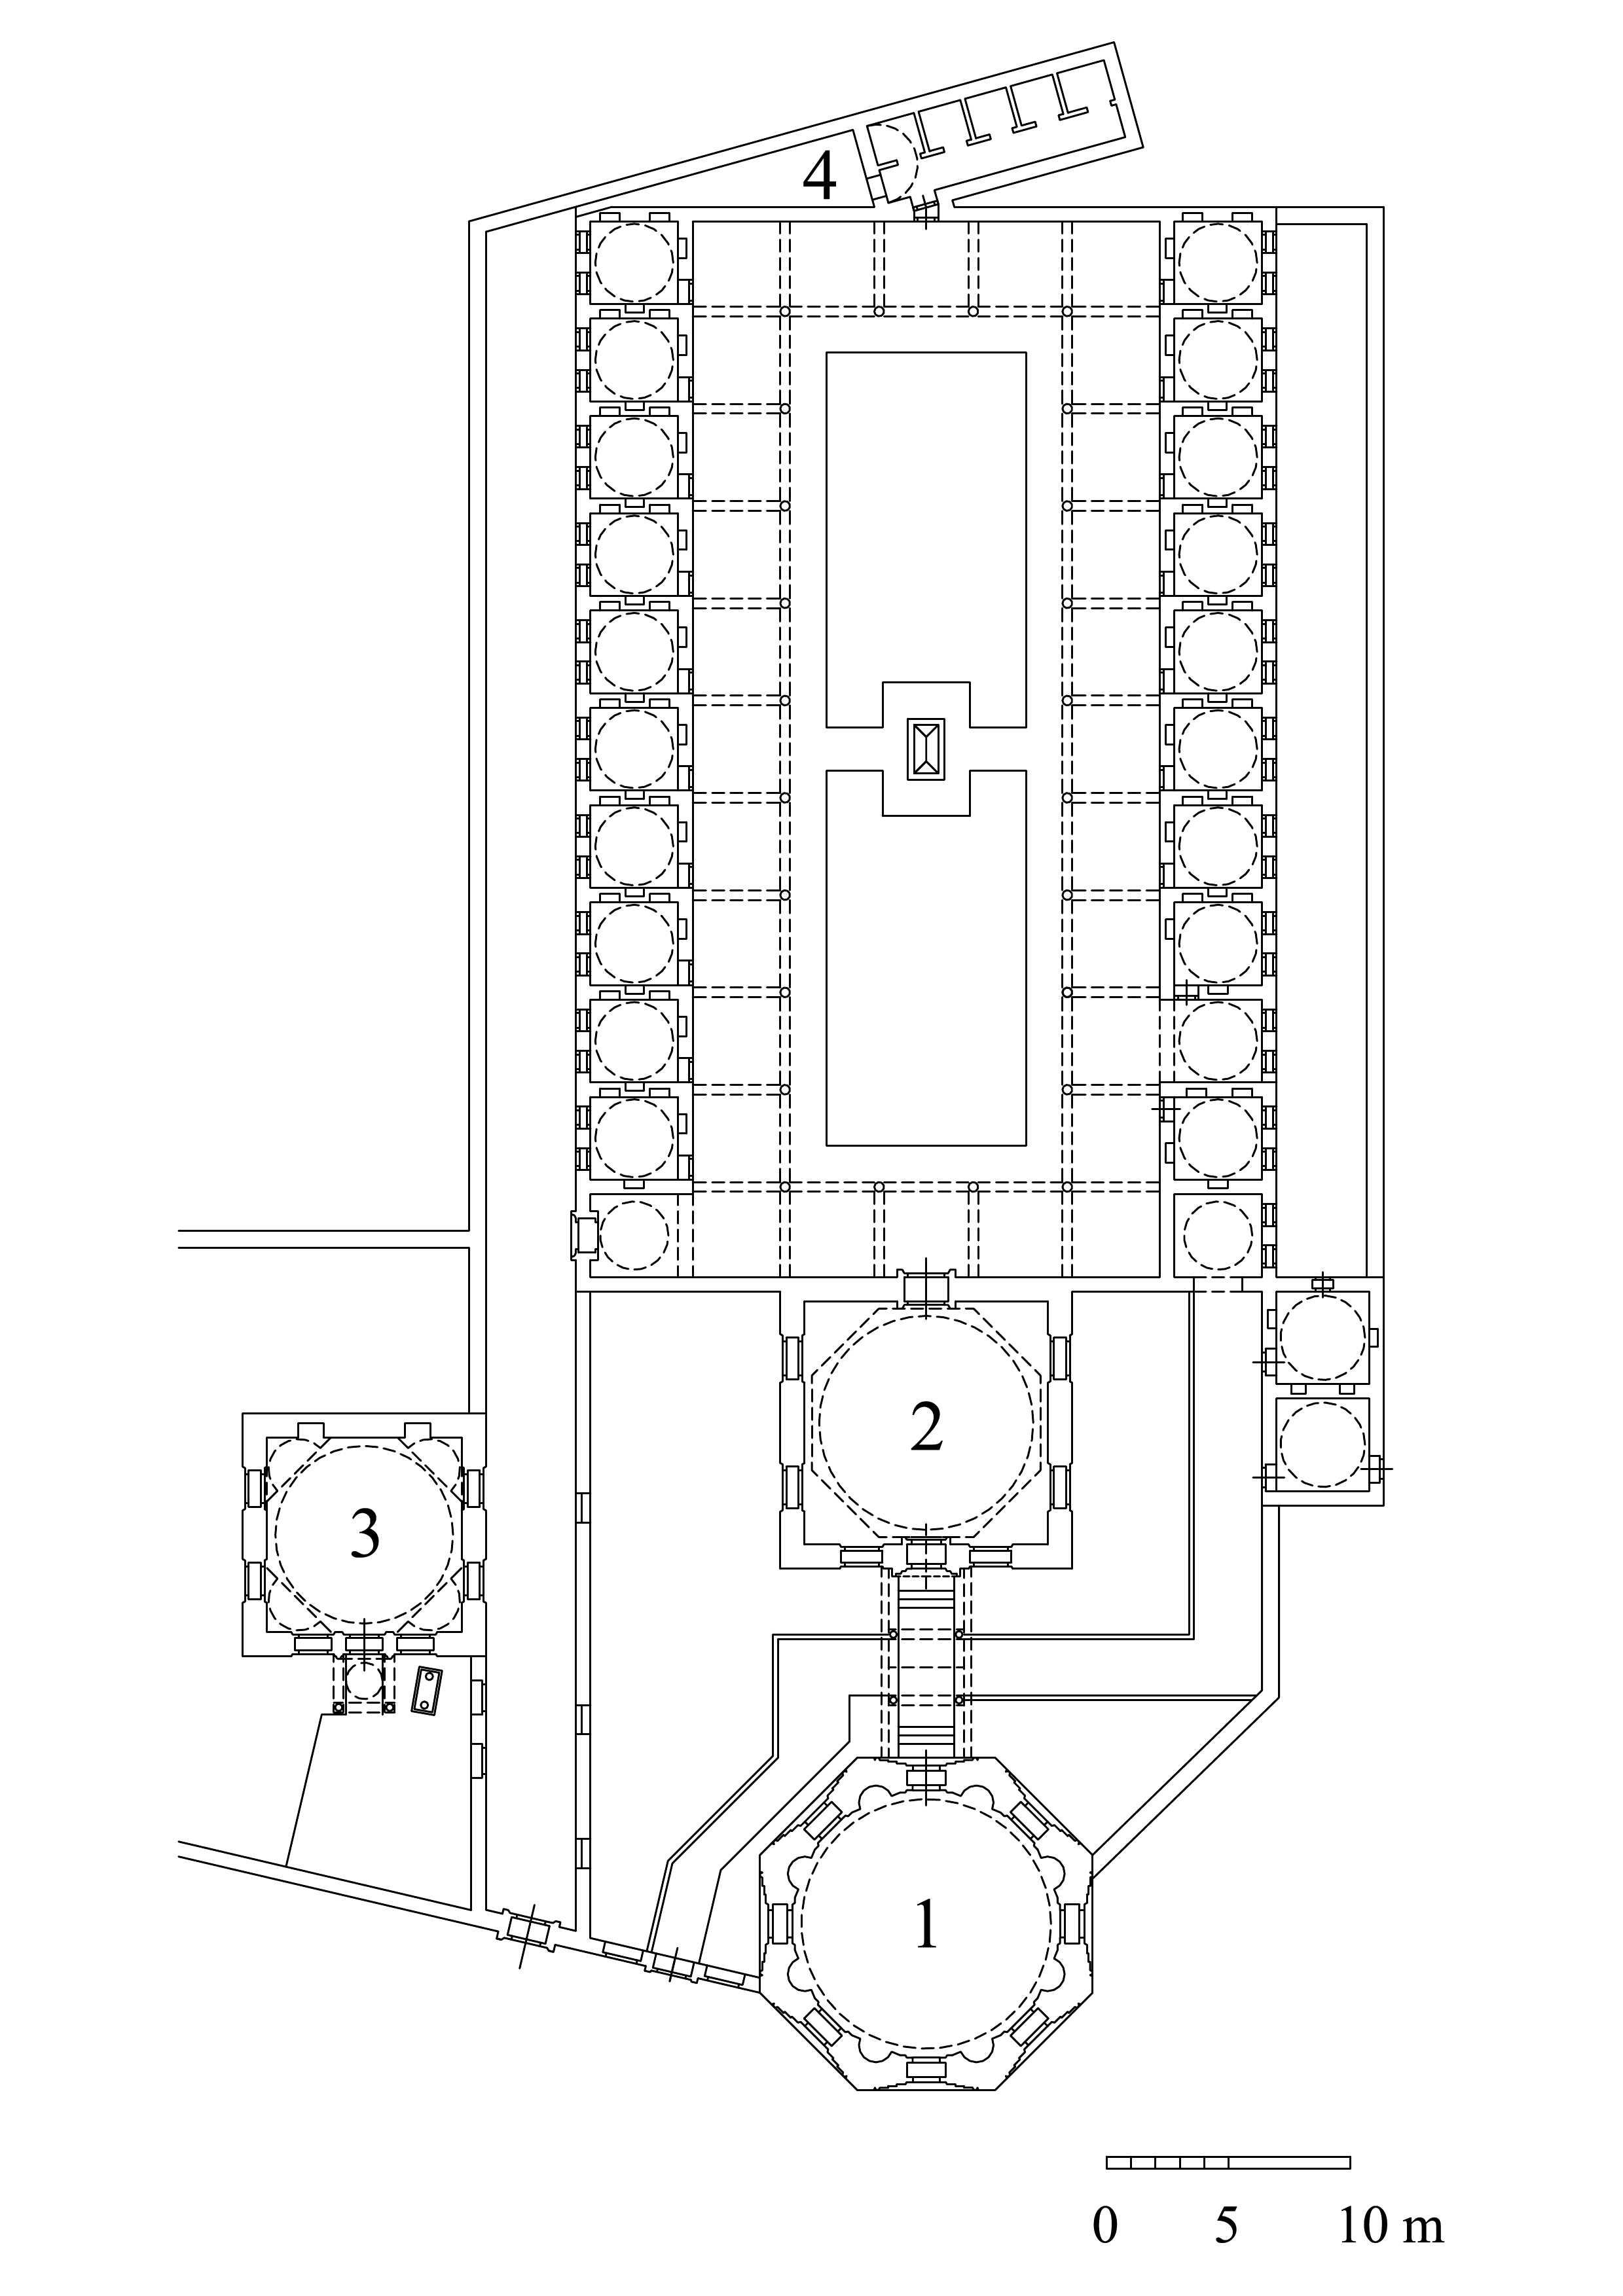 Floor plan of funerary madrasa showing (1) mausoleum with street fountain, (2) madrasa, (3) school for Koran recitation, (4) latrines